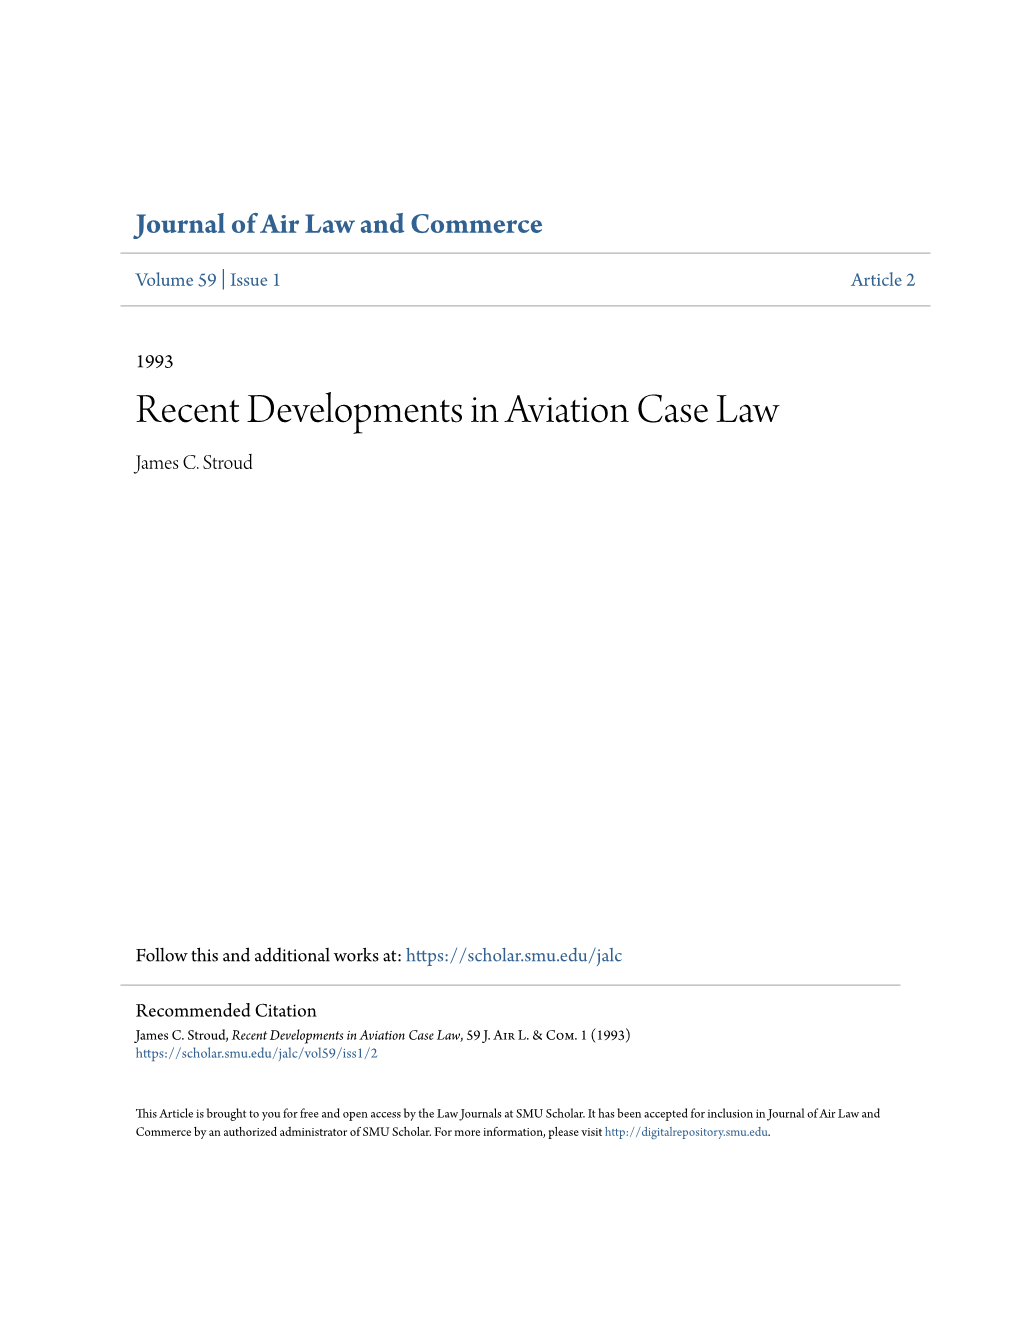 Recent Developments in Aviation Case Law James C